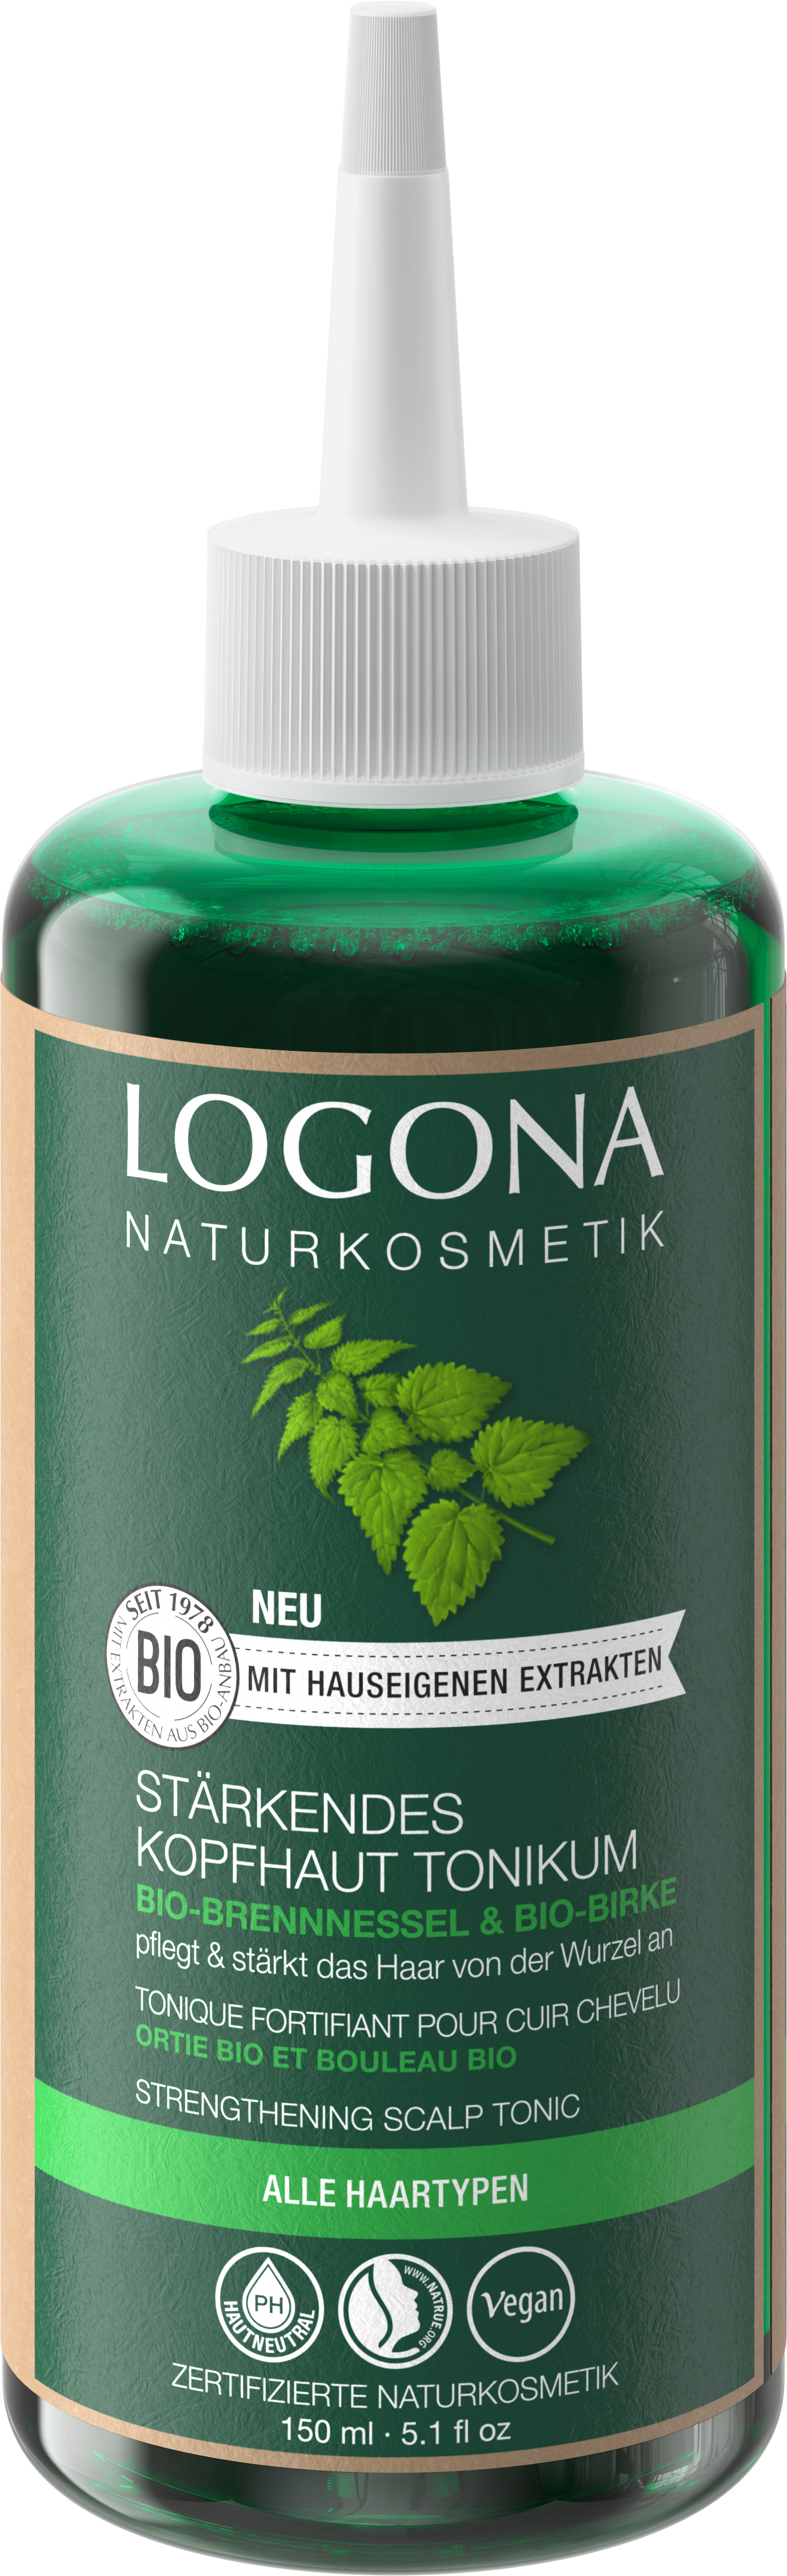 Stärkendes Kopfhaut Tonikum Bio-Brennnessel & Bio-Birke | LOGONA  Naturkosmetik